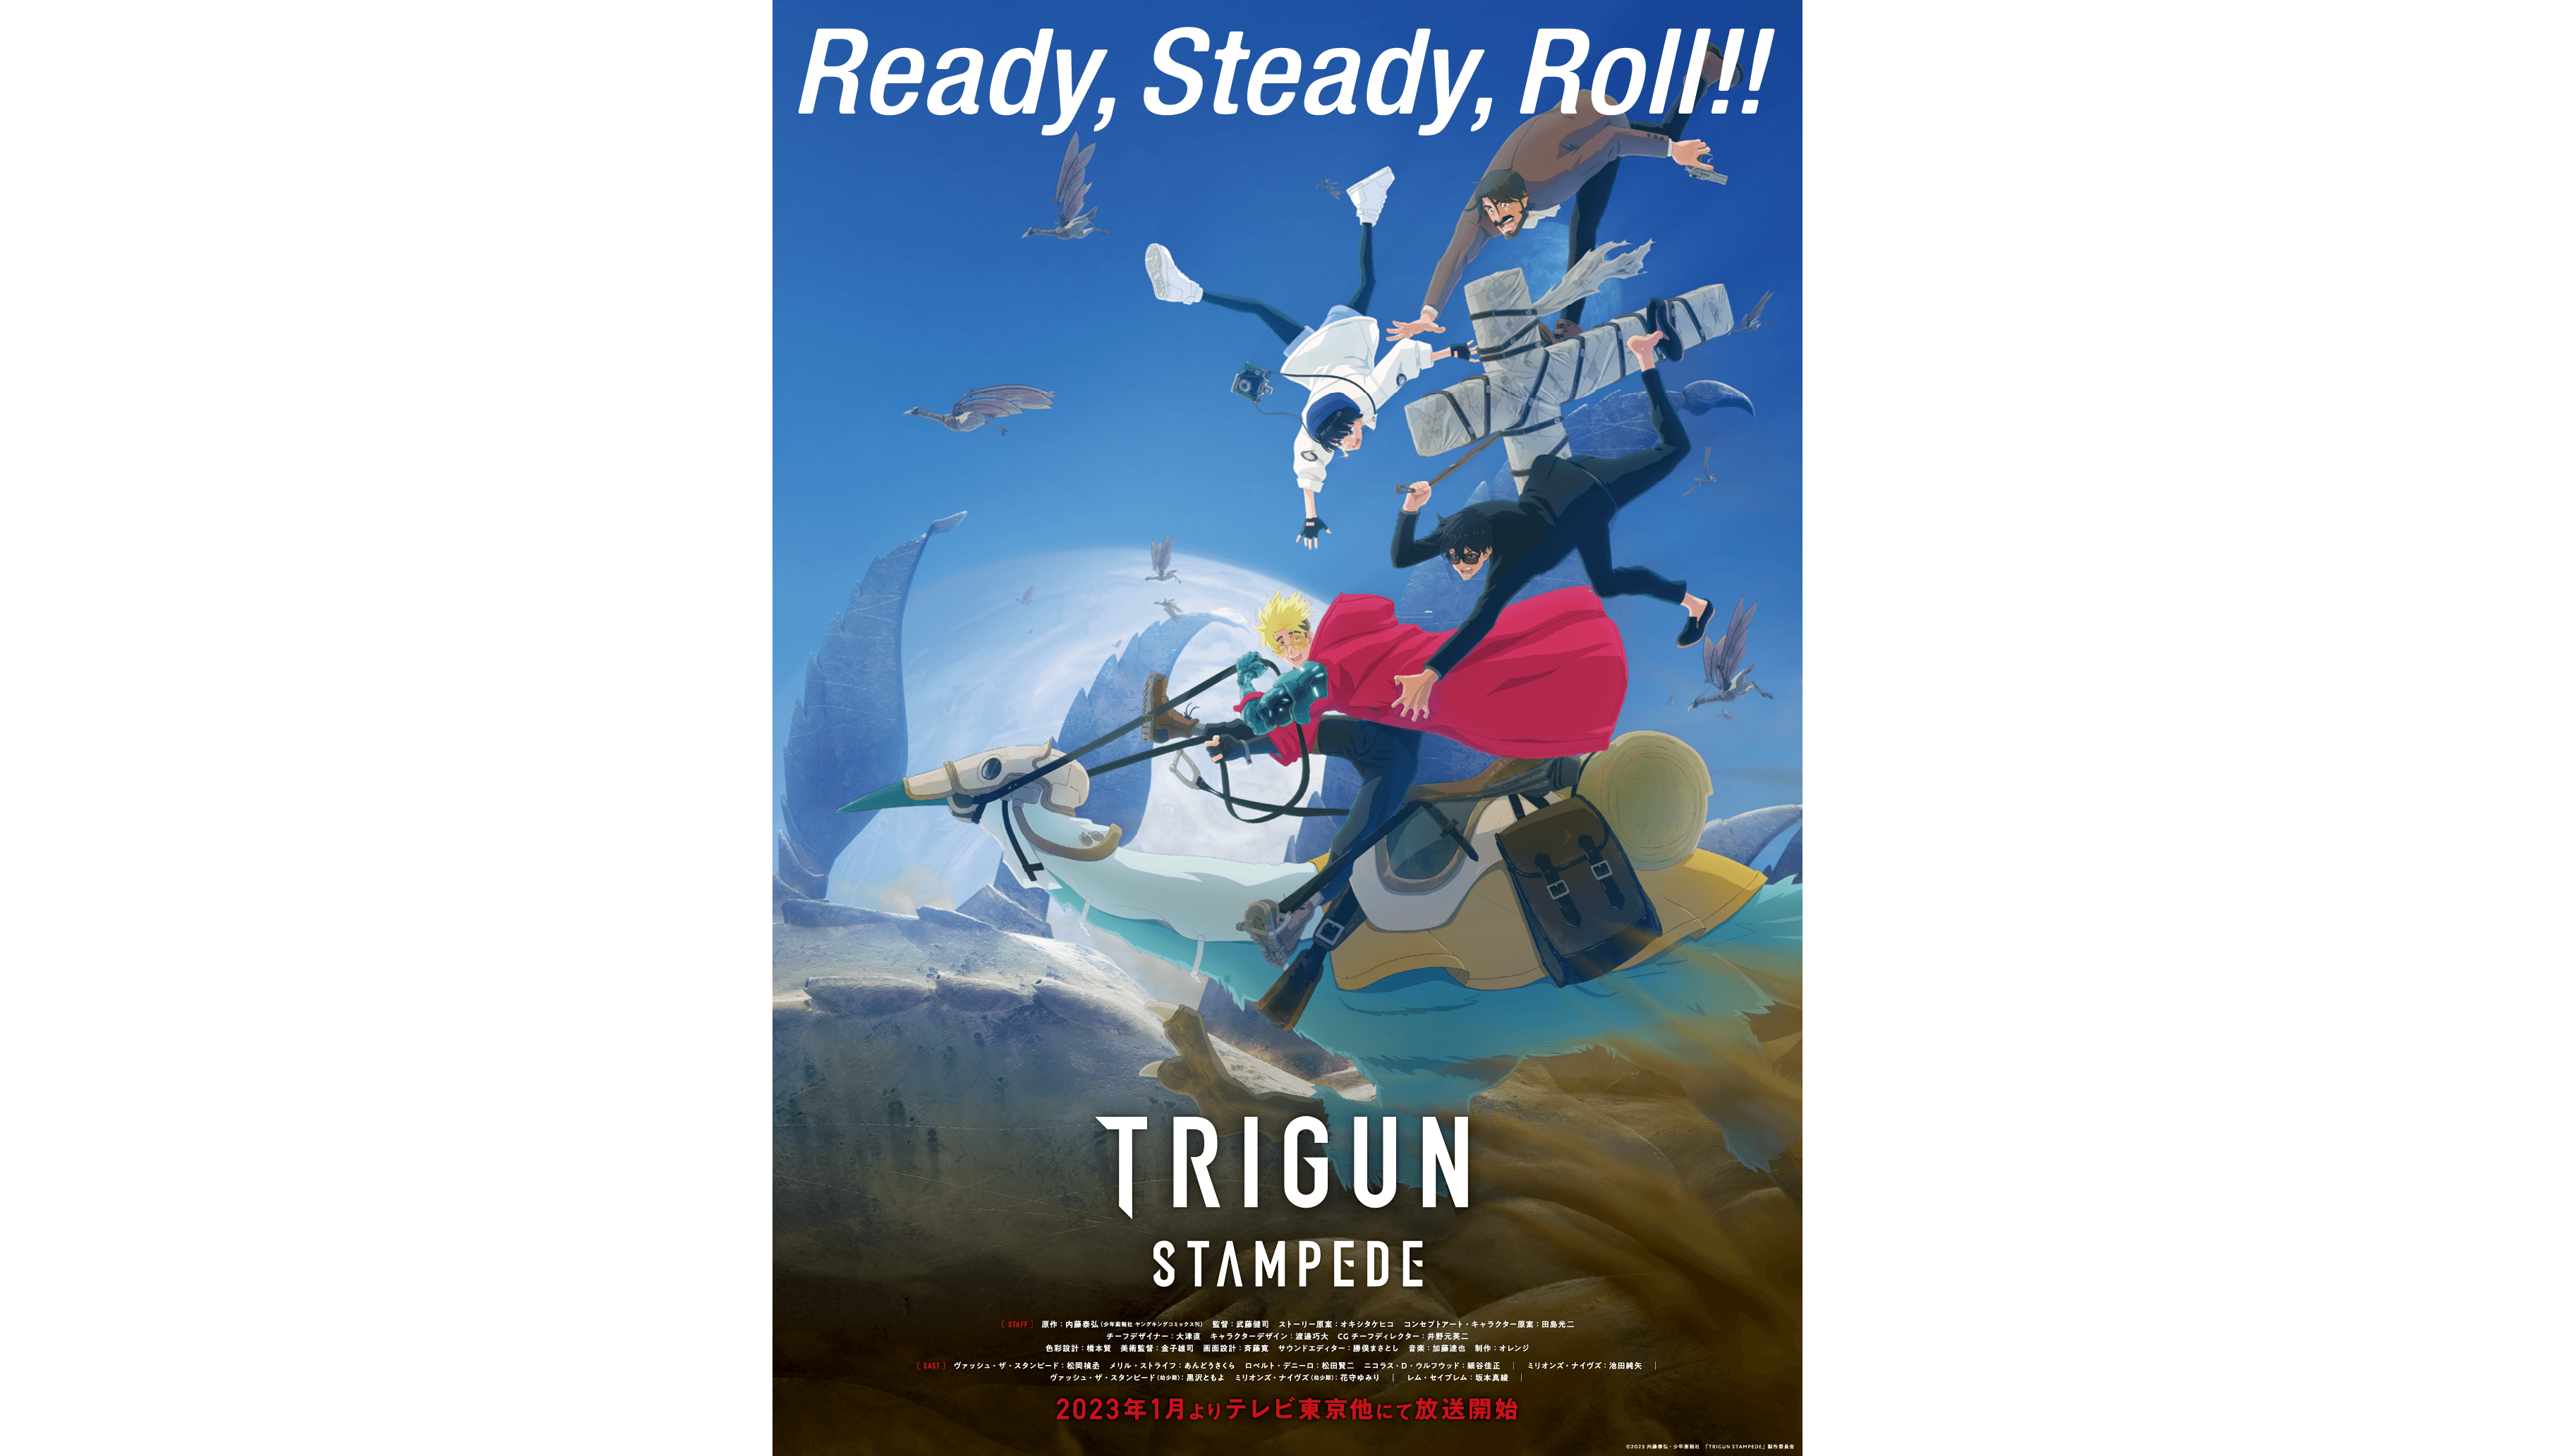 Trigun Stampede anime: Release date, VA cast, trailer